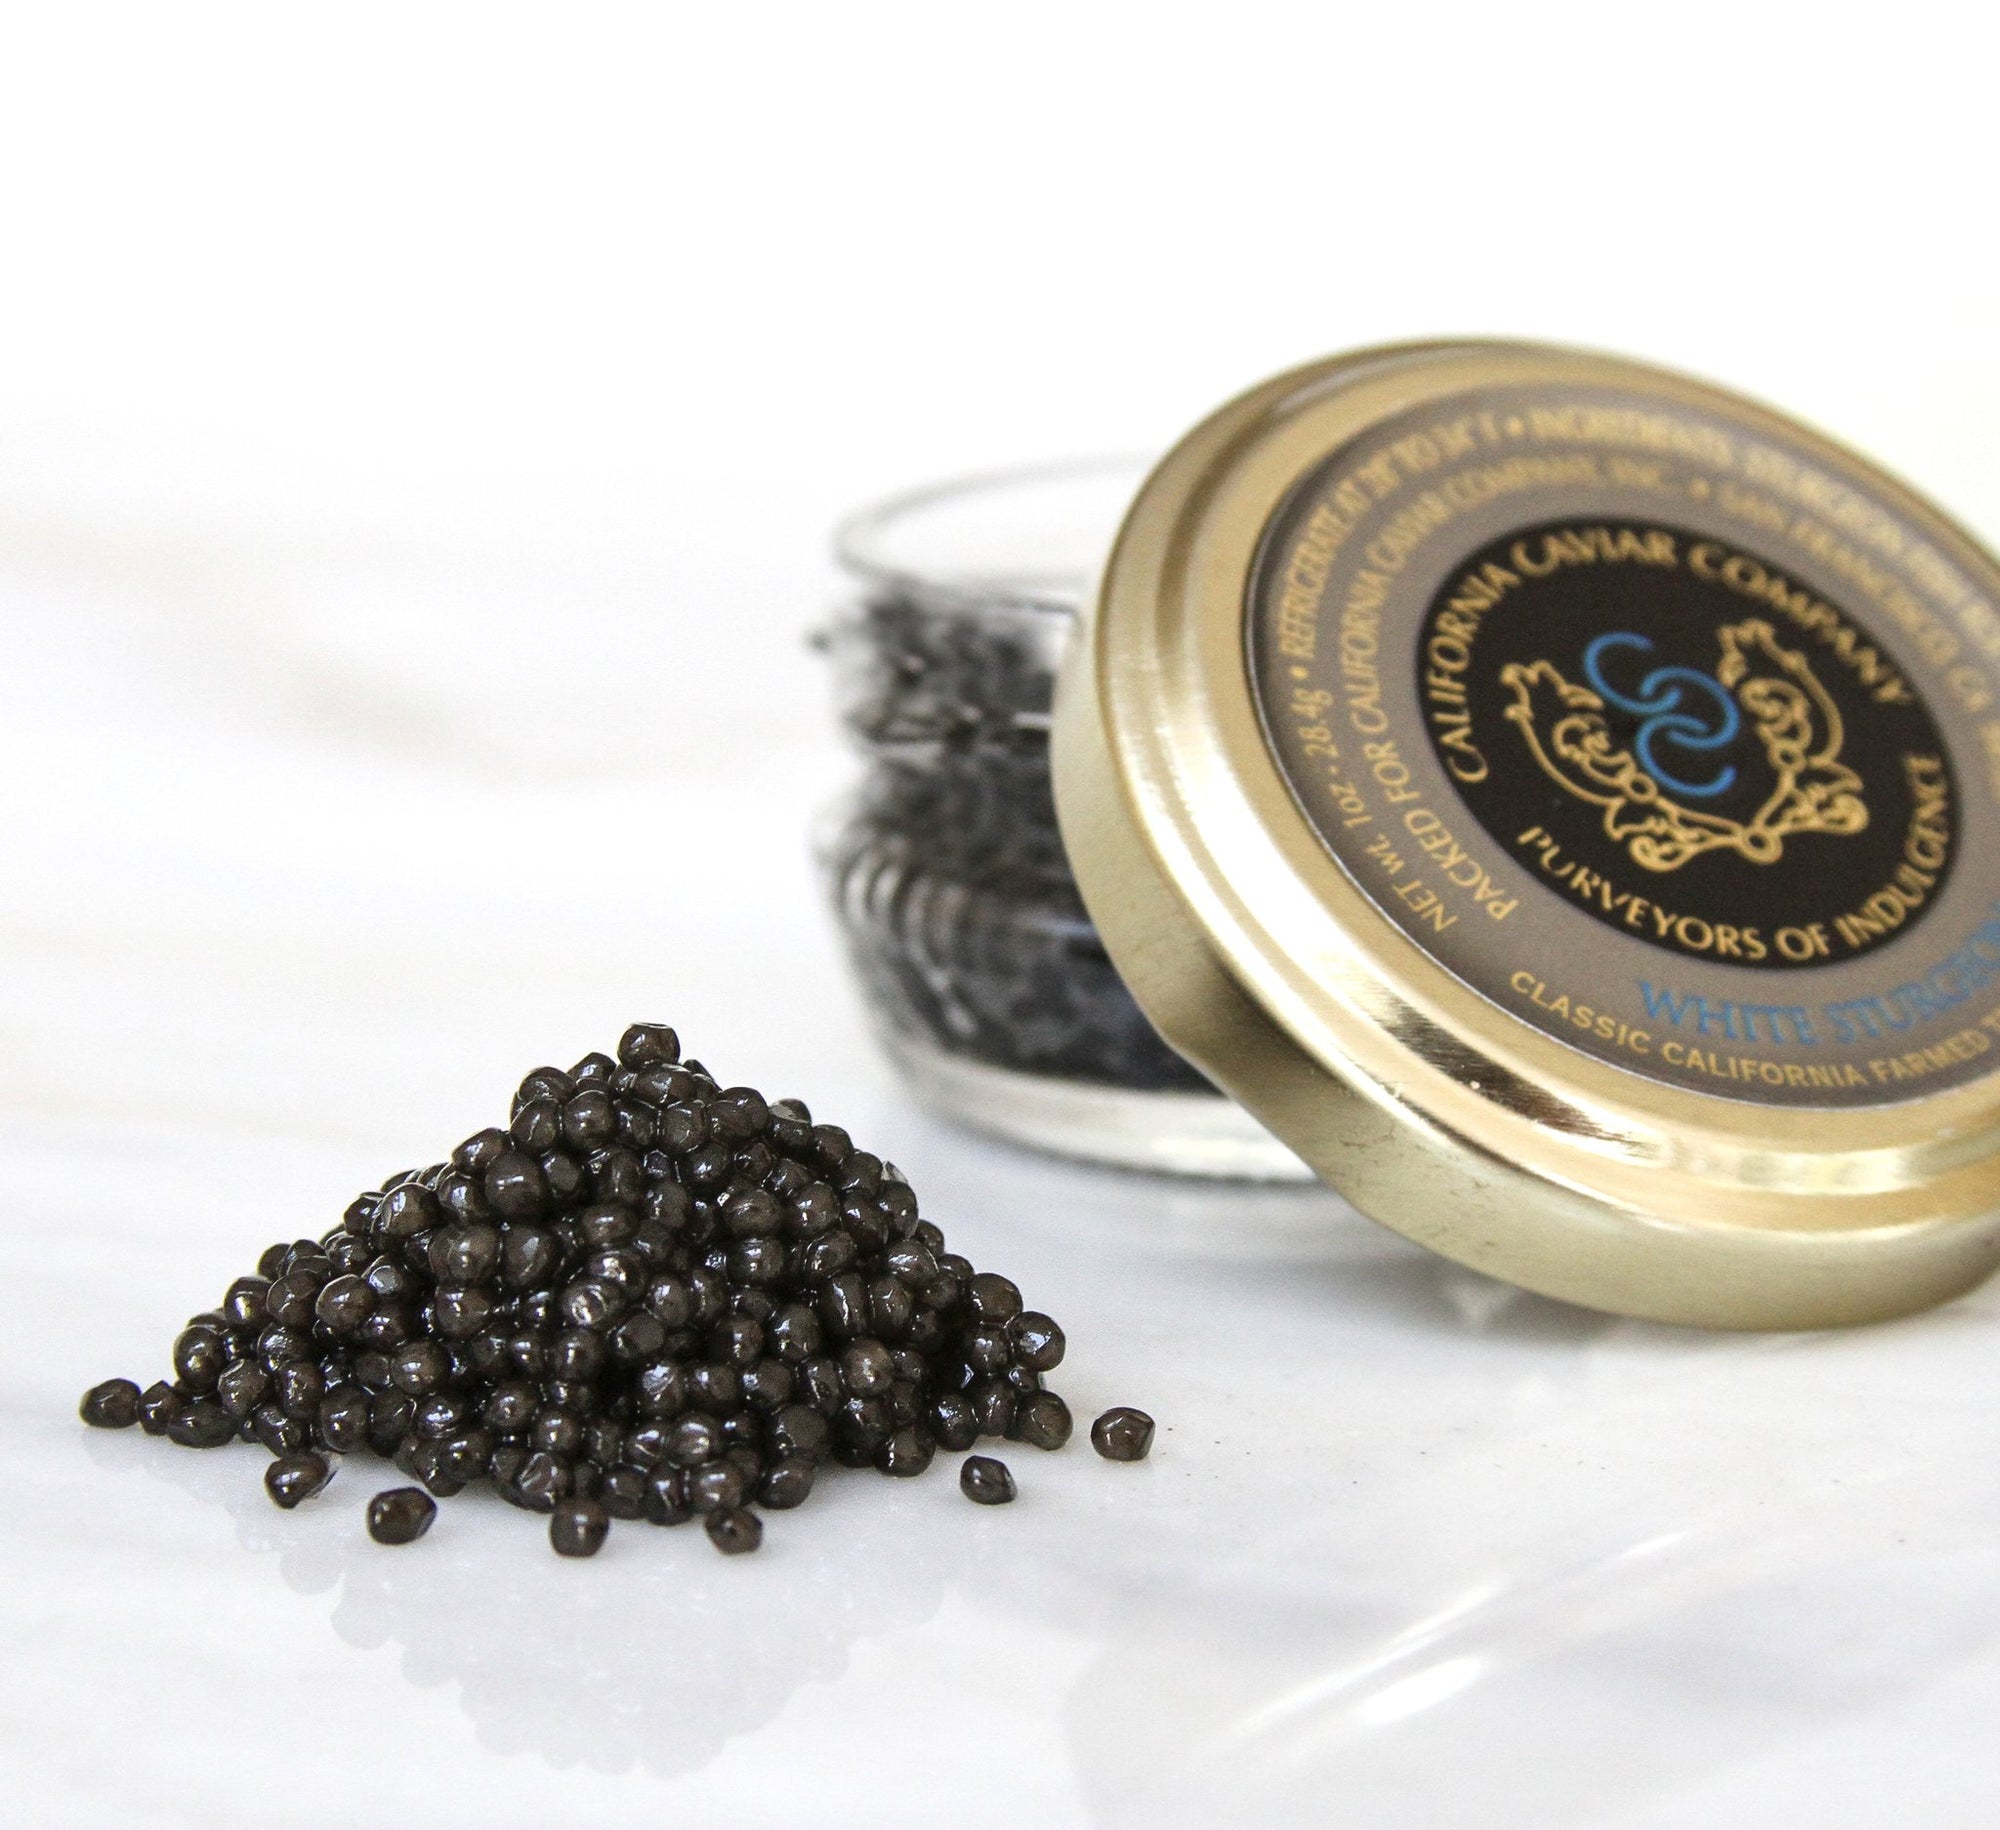 California Caviar Company Classic White Sturgeon Caviar (1oz)